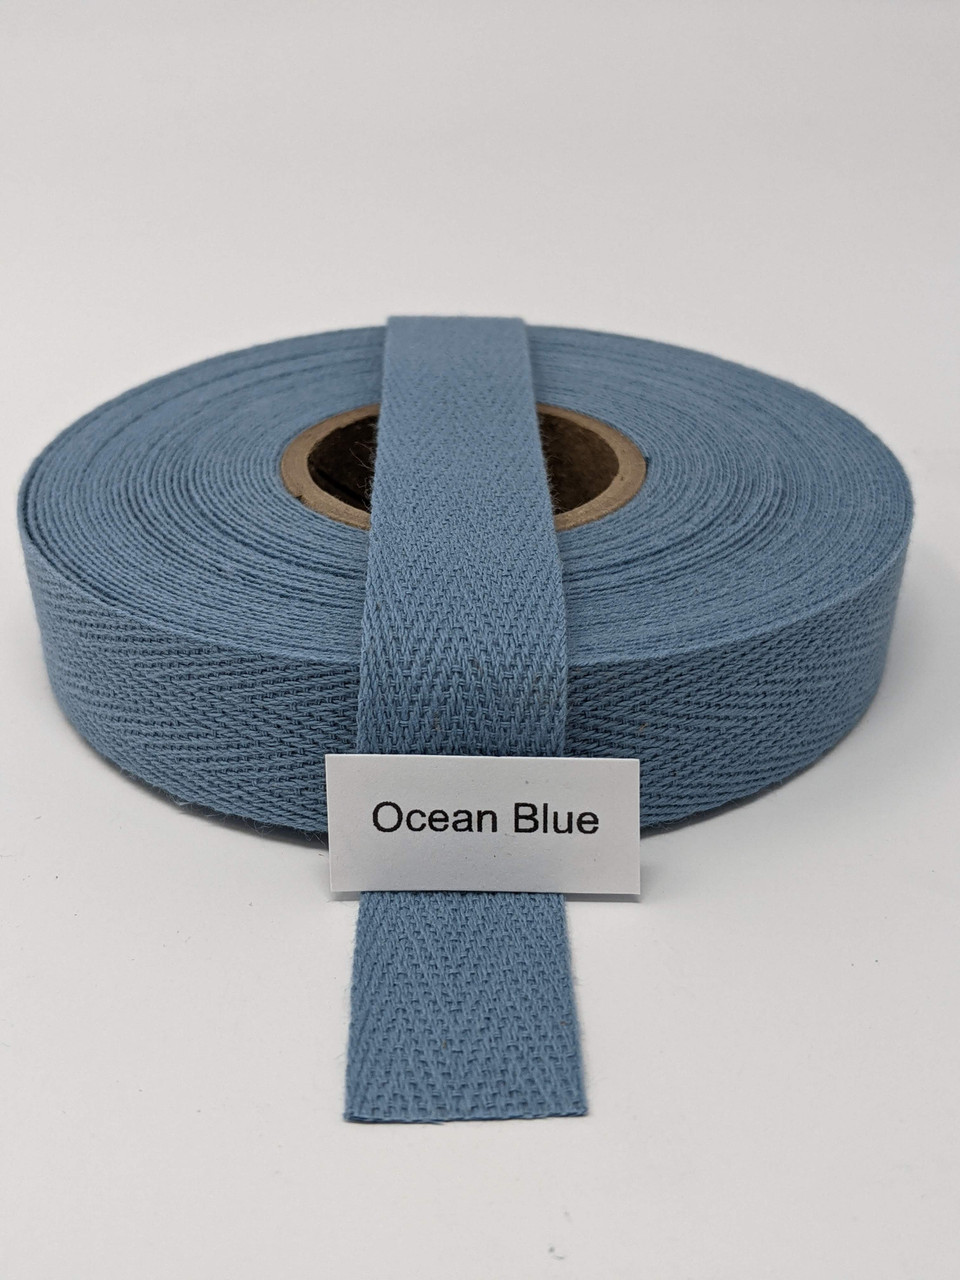 Cotton Twill Tape 3/4 Ocean Blue, 10 yard roll